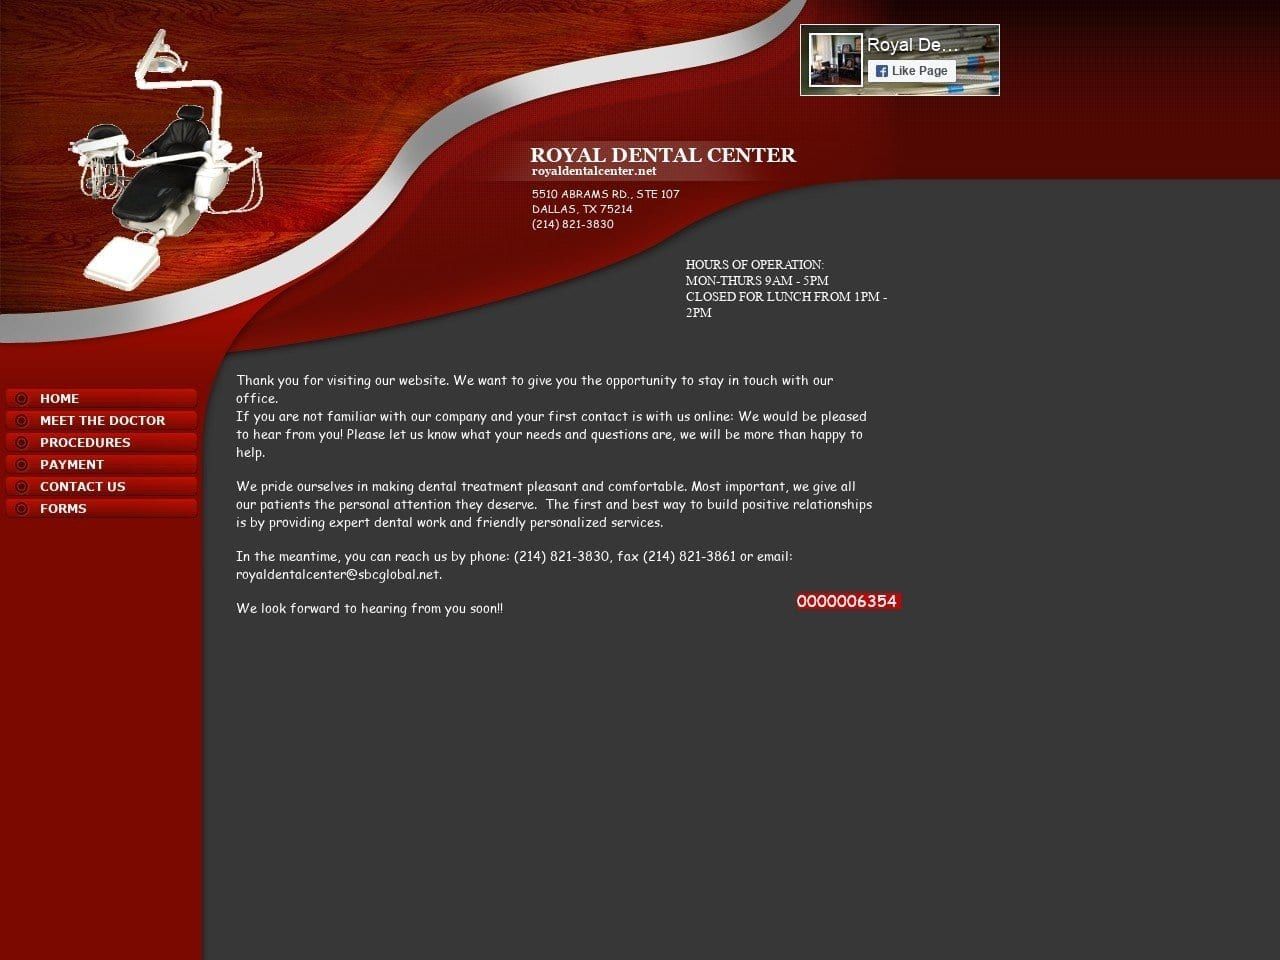 Royal Dental Center Website Screenshot from royaldentalcenter.net